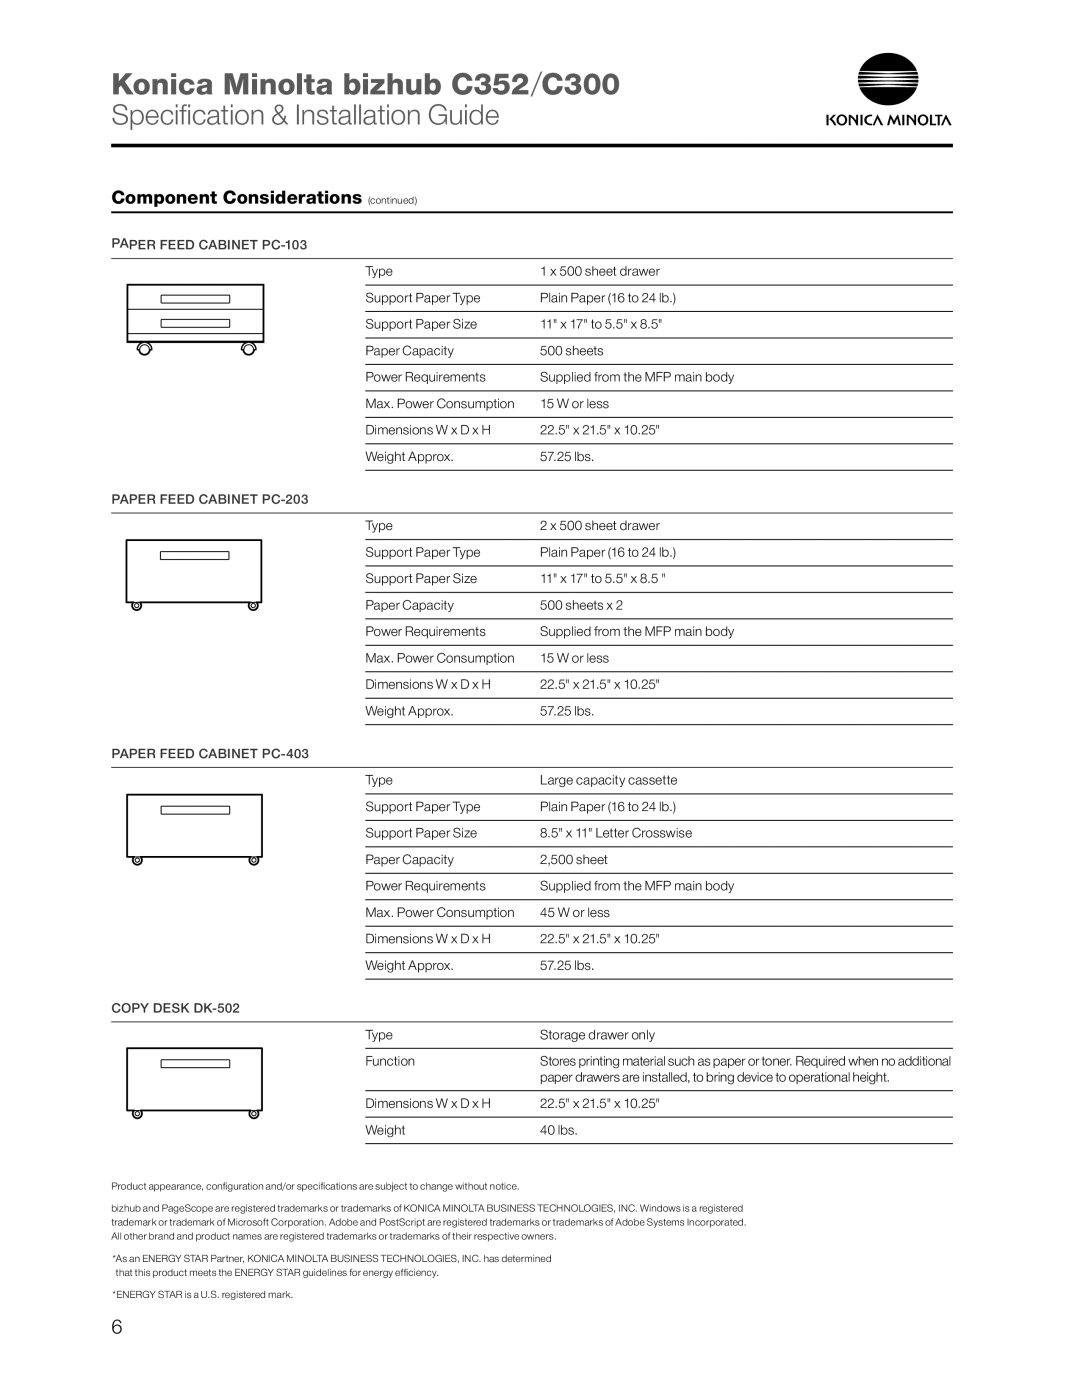 Konica Minolta Konica Minolta bizhub C352 C300, Specification & Installation Guide, Component Considerations continued 